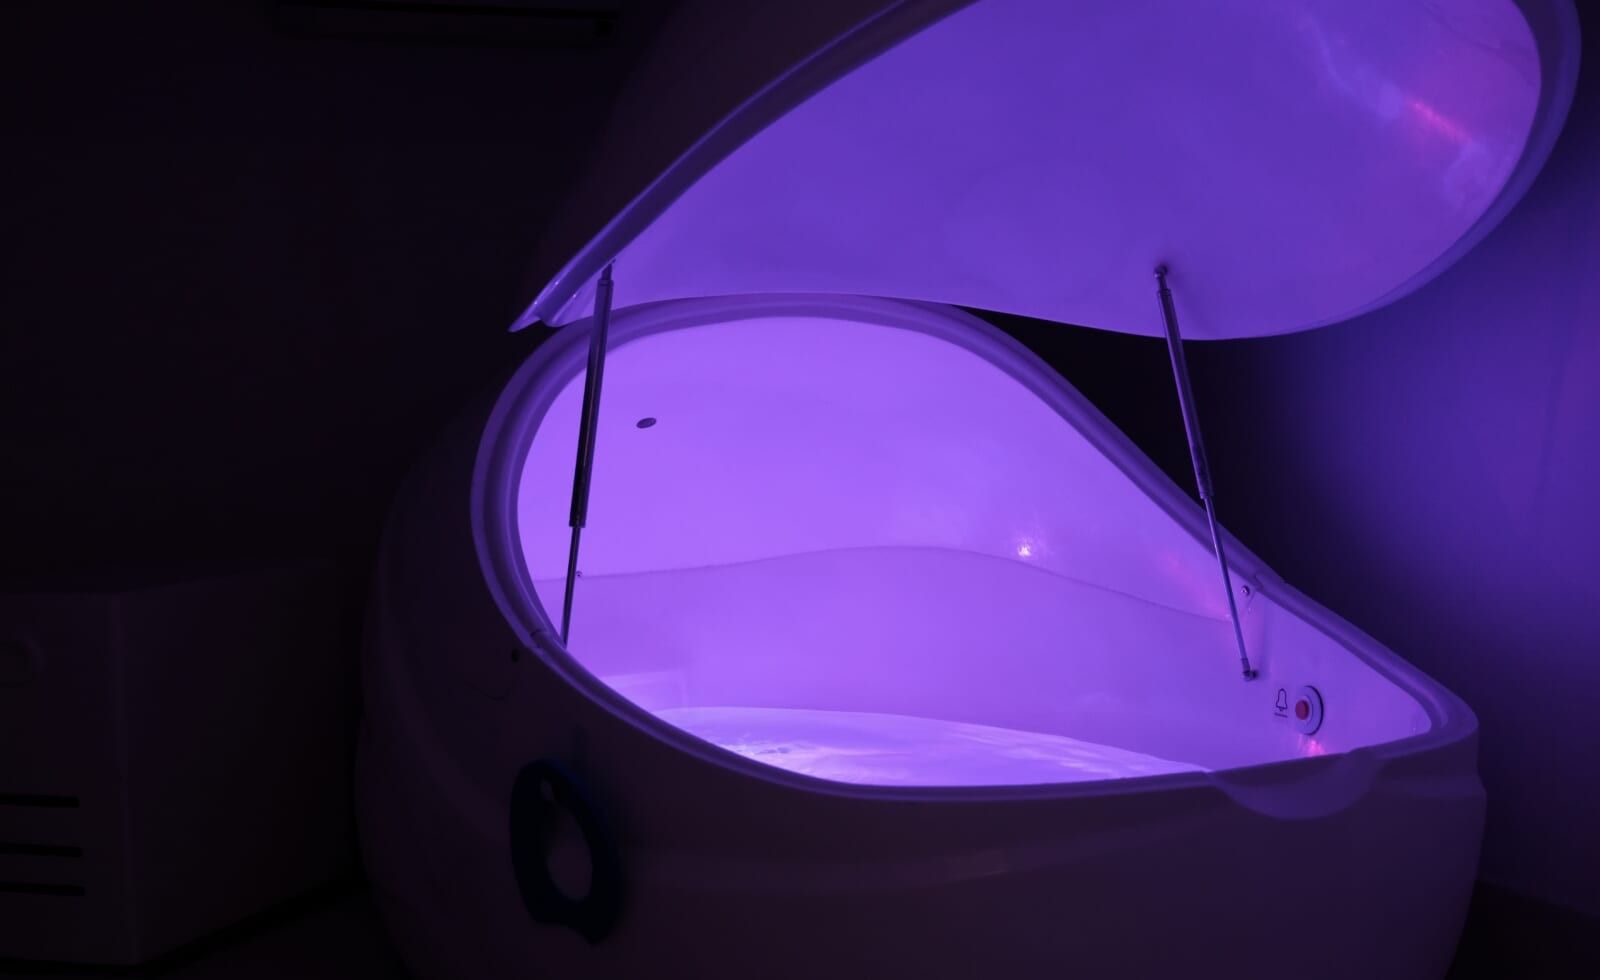 Purple Sensory Deprivation Tank In Darkness